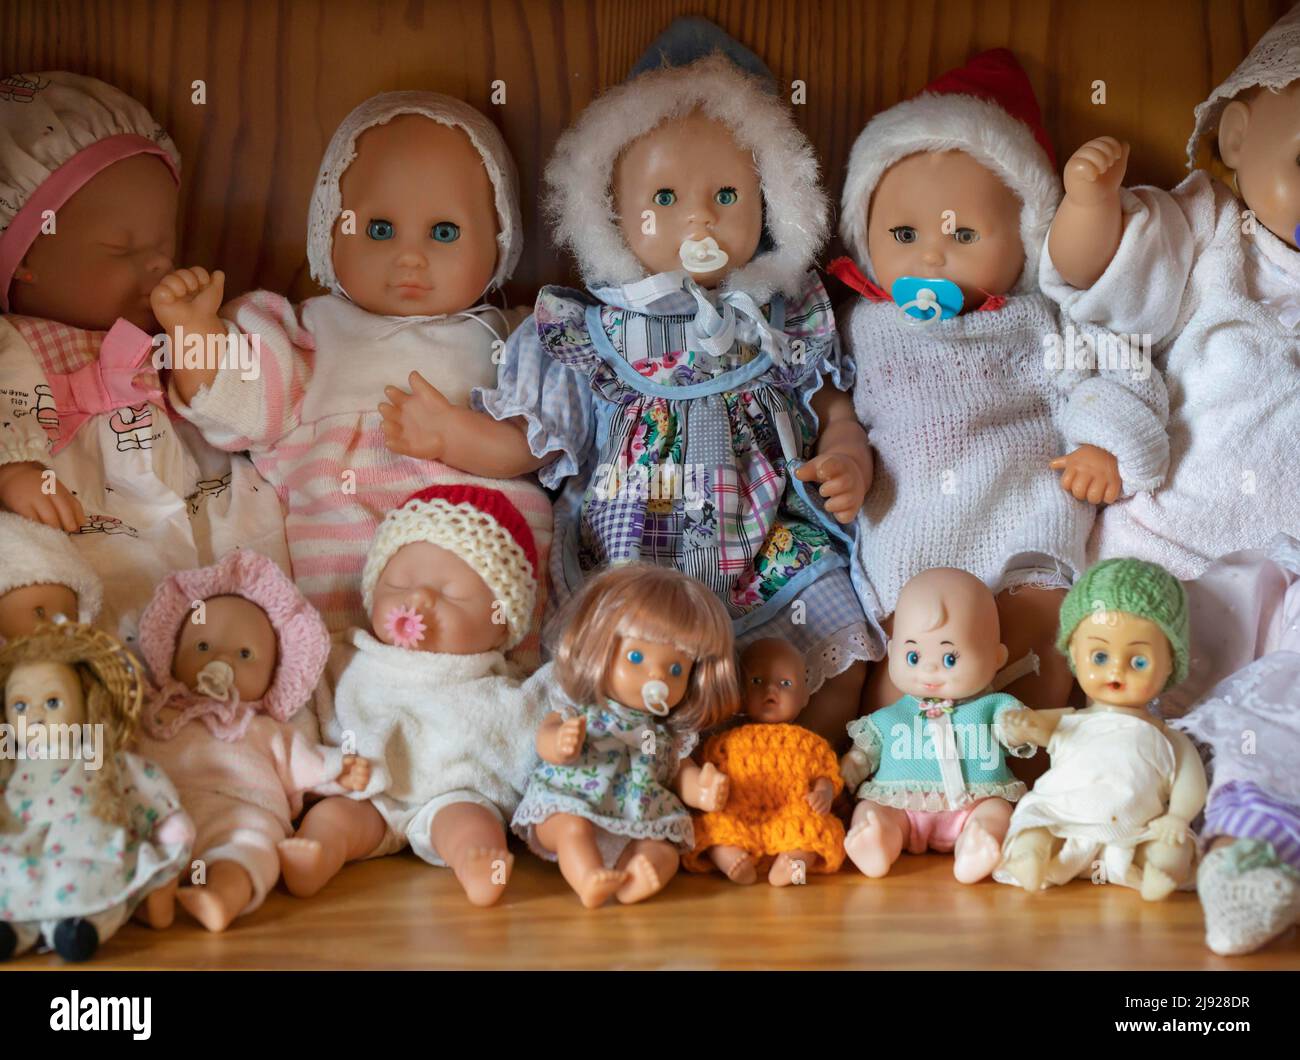 Decorative dolls and baby dolls, children's toys, symbolic image, Austria Stock Photo